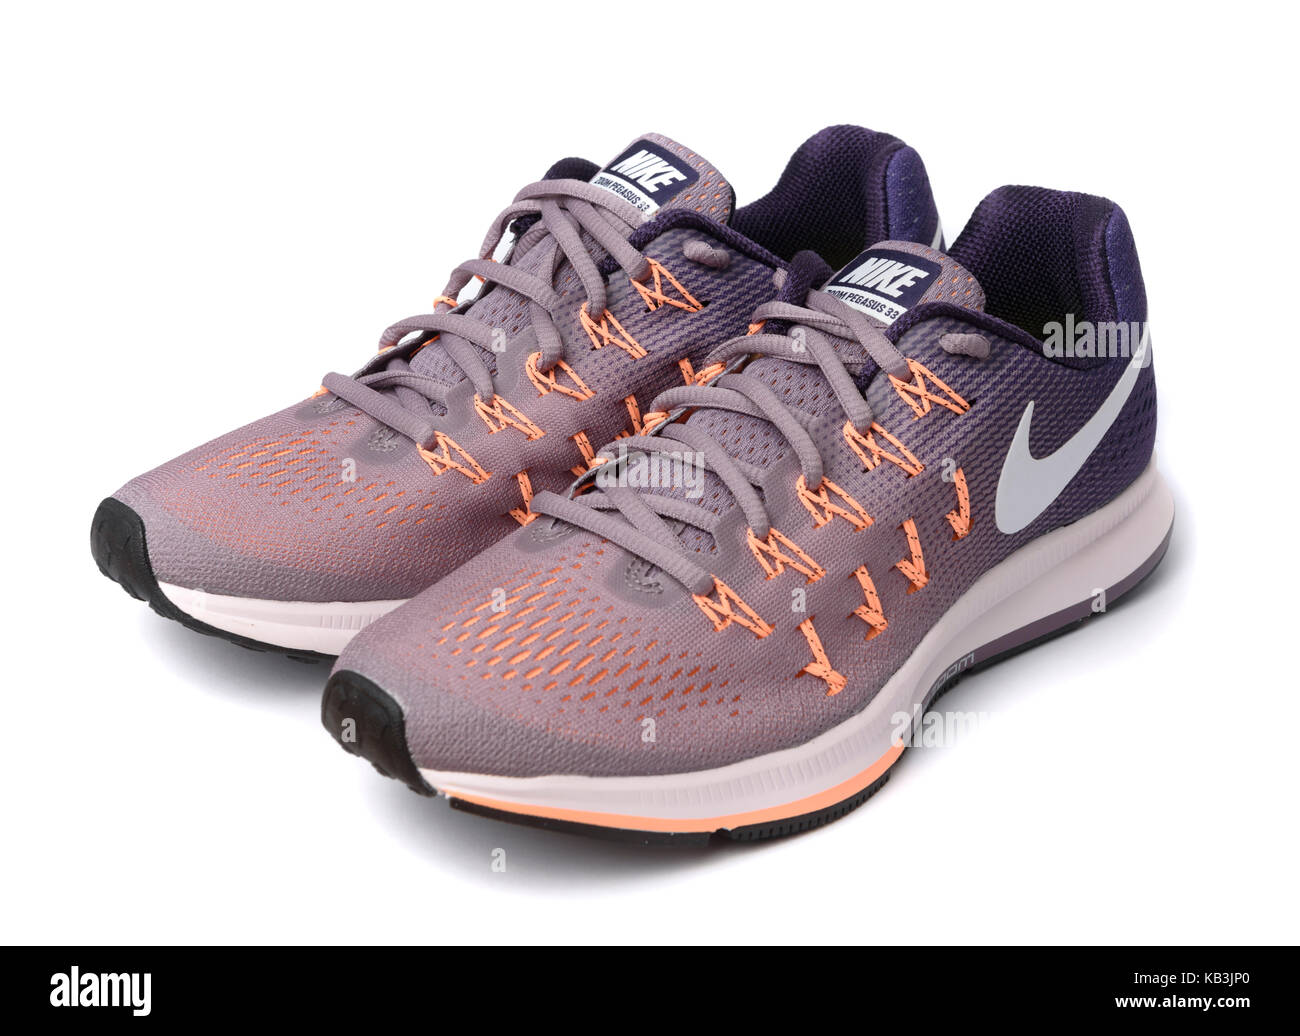 Viola e arancione Nike Pegasus 33 scarpe running isolati su sfondo bianco  Foto stock - Alamy